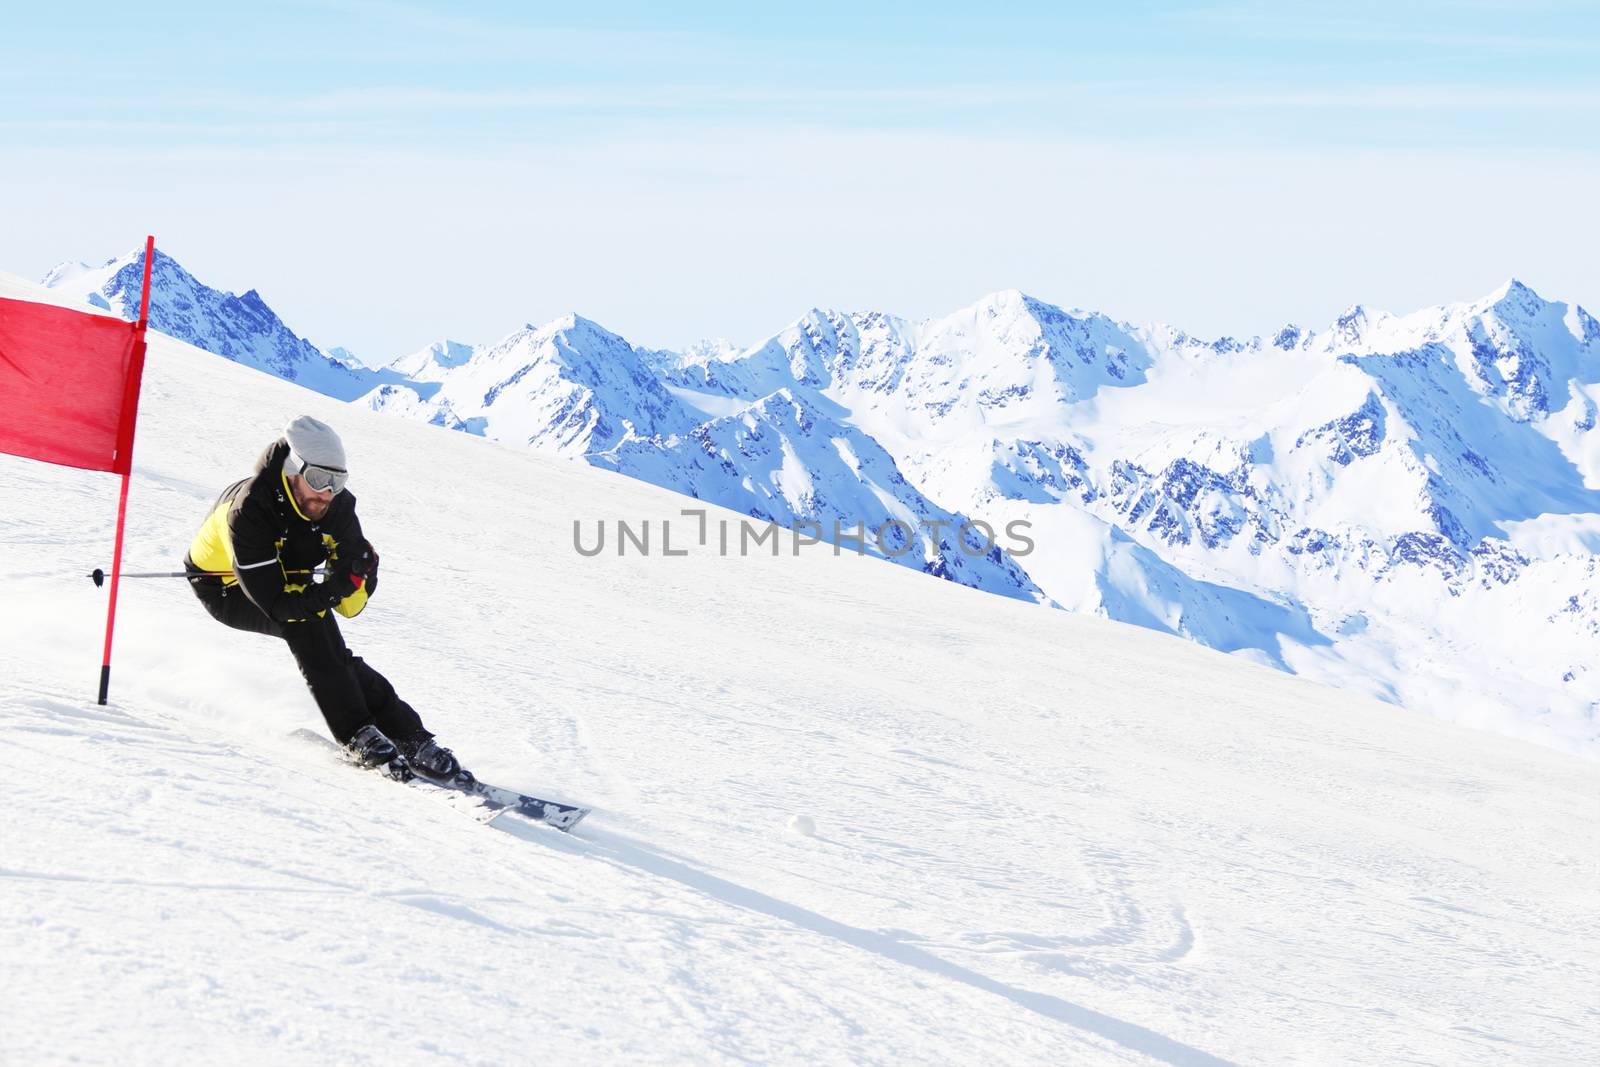 Giant Slalom ski racer skiing downhill in high mountains, Solden, Austria